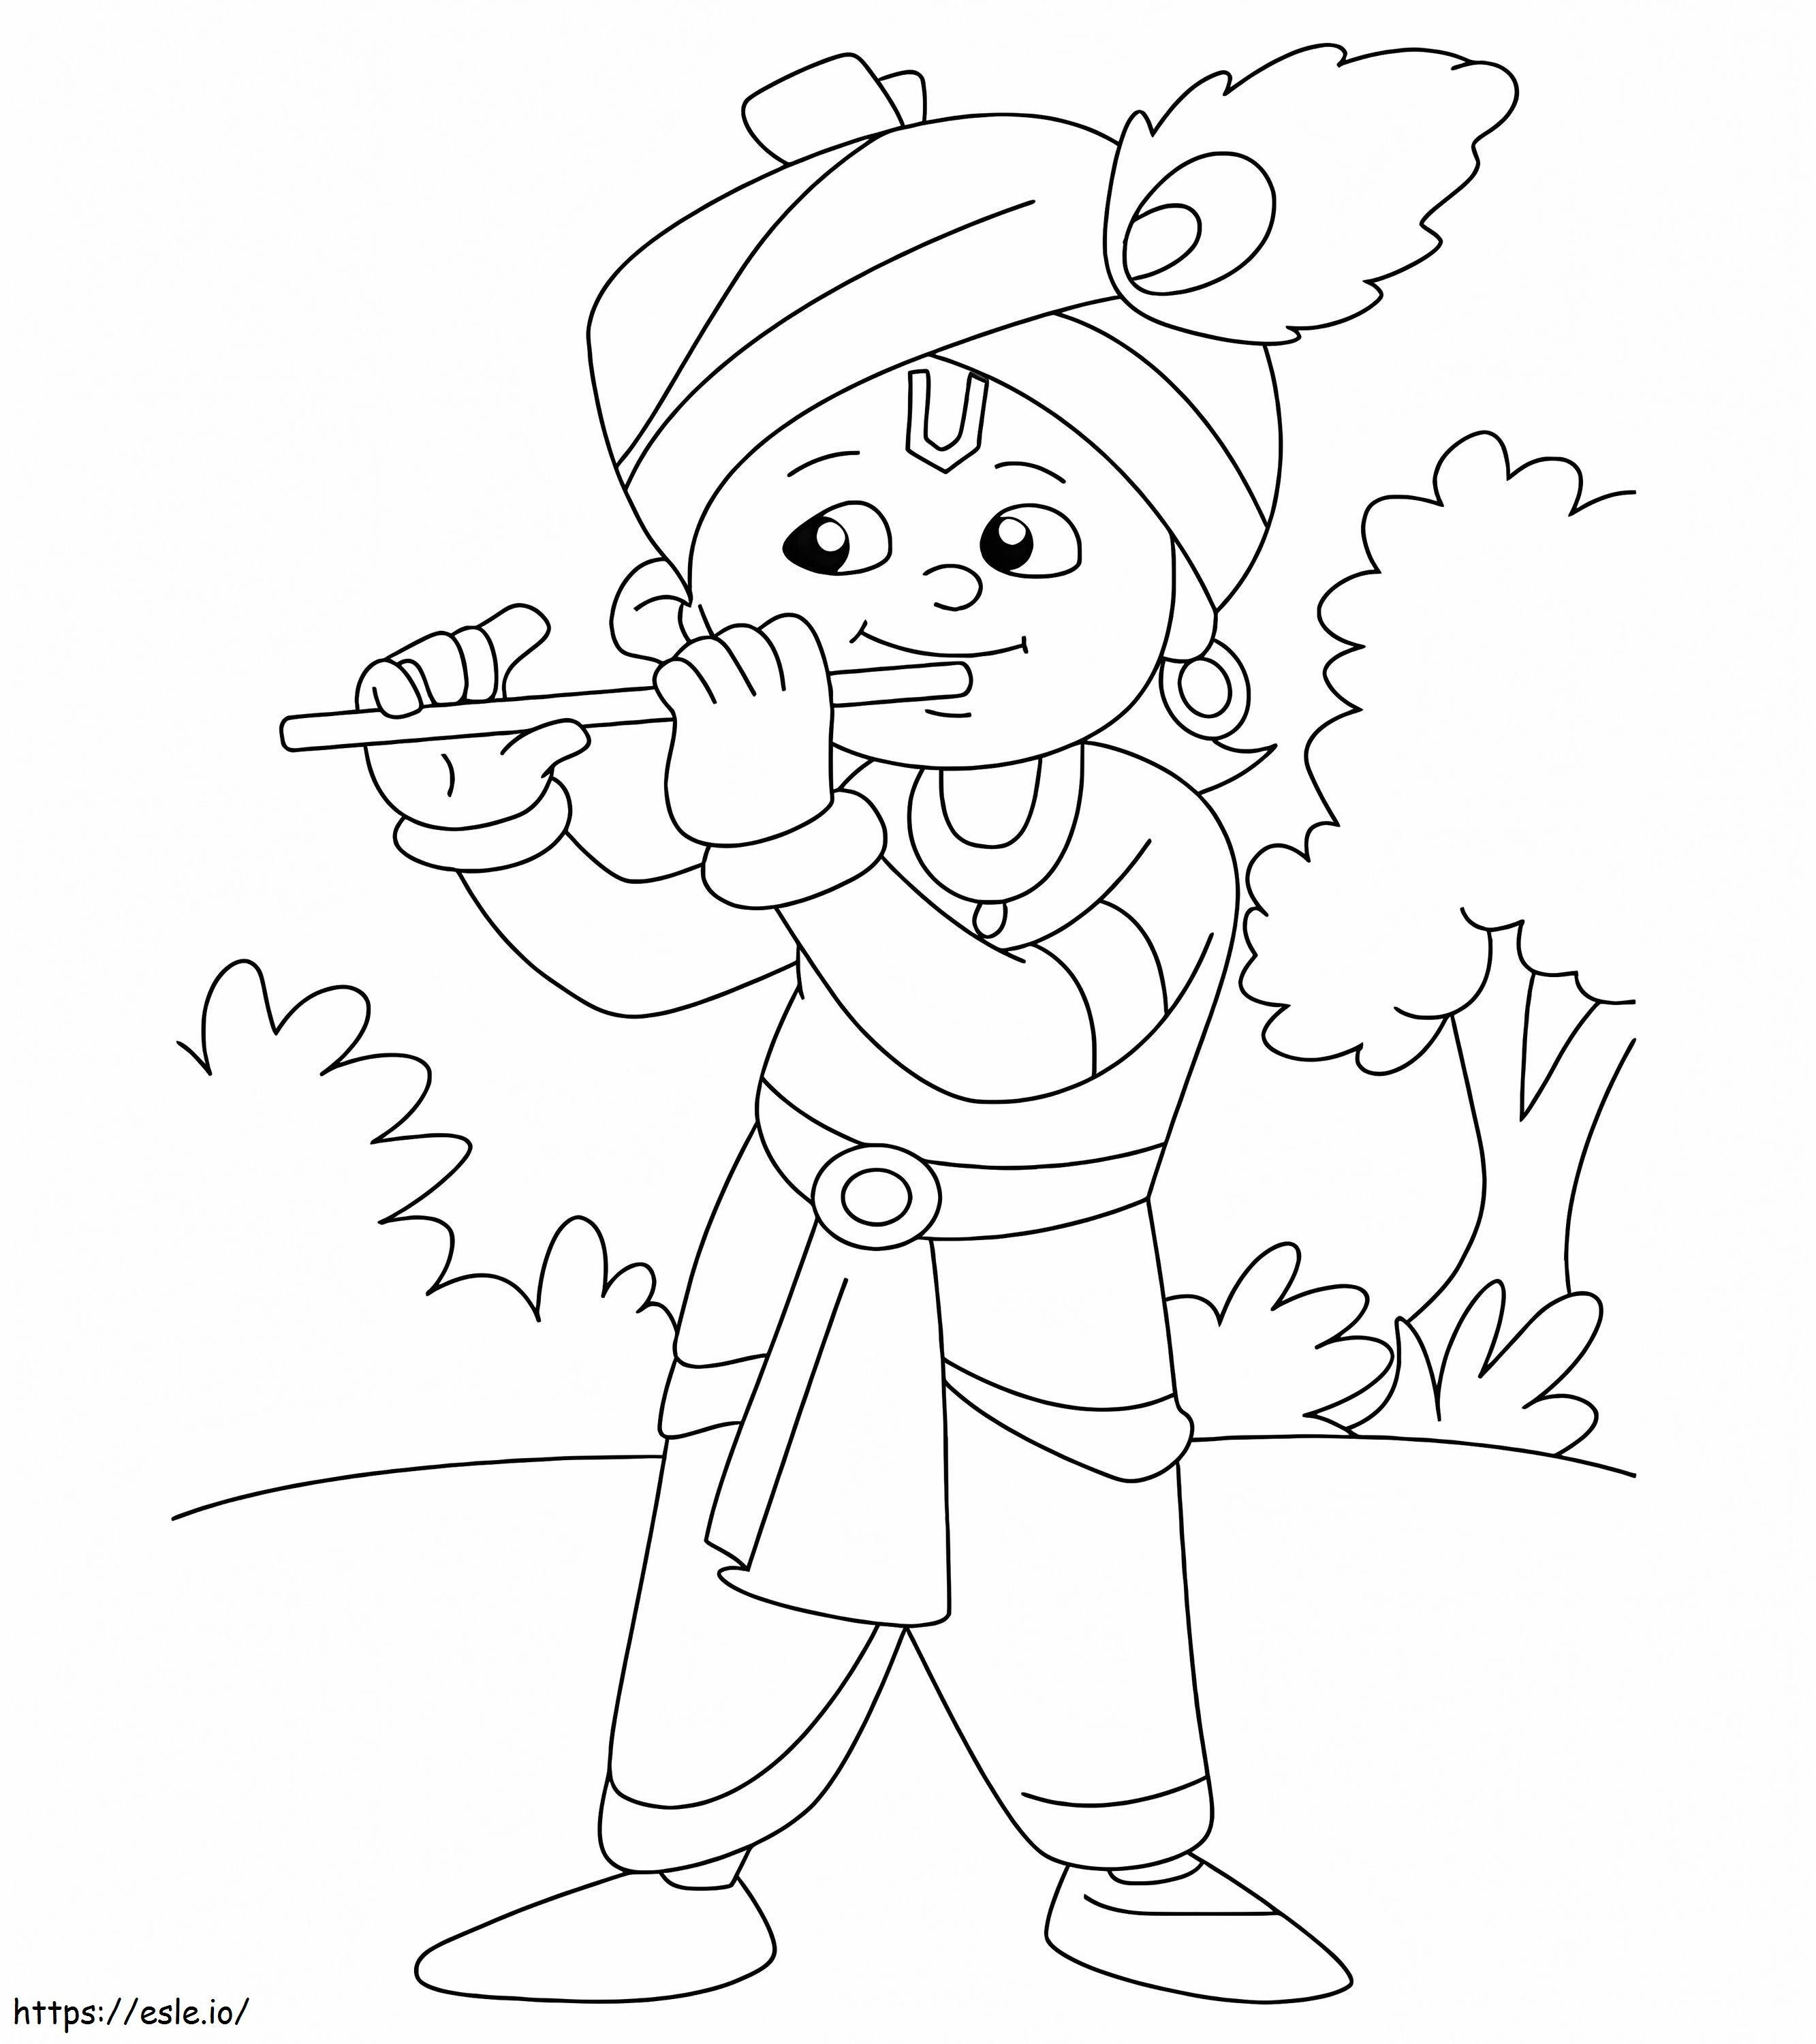 Niño de dibujos animados tocando la flauta para colorear